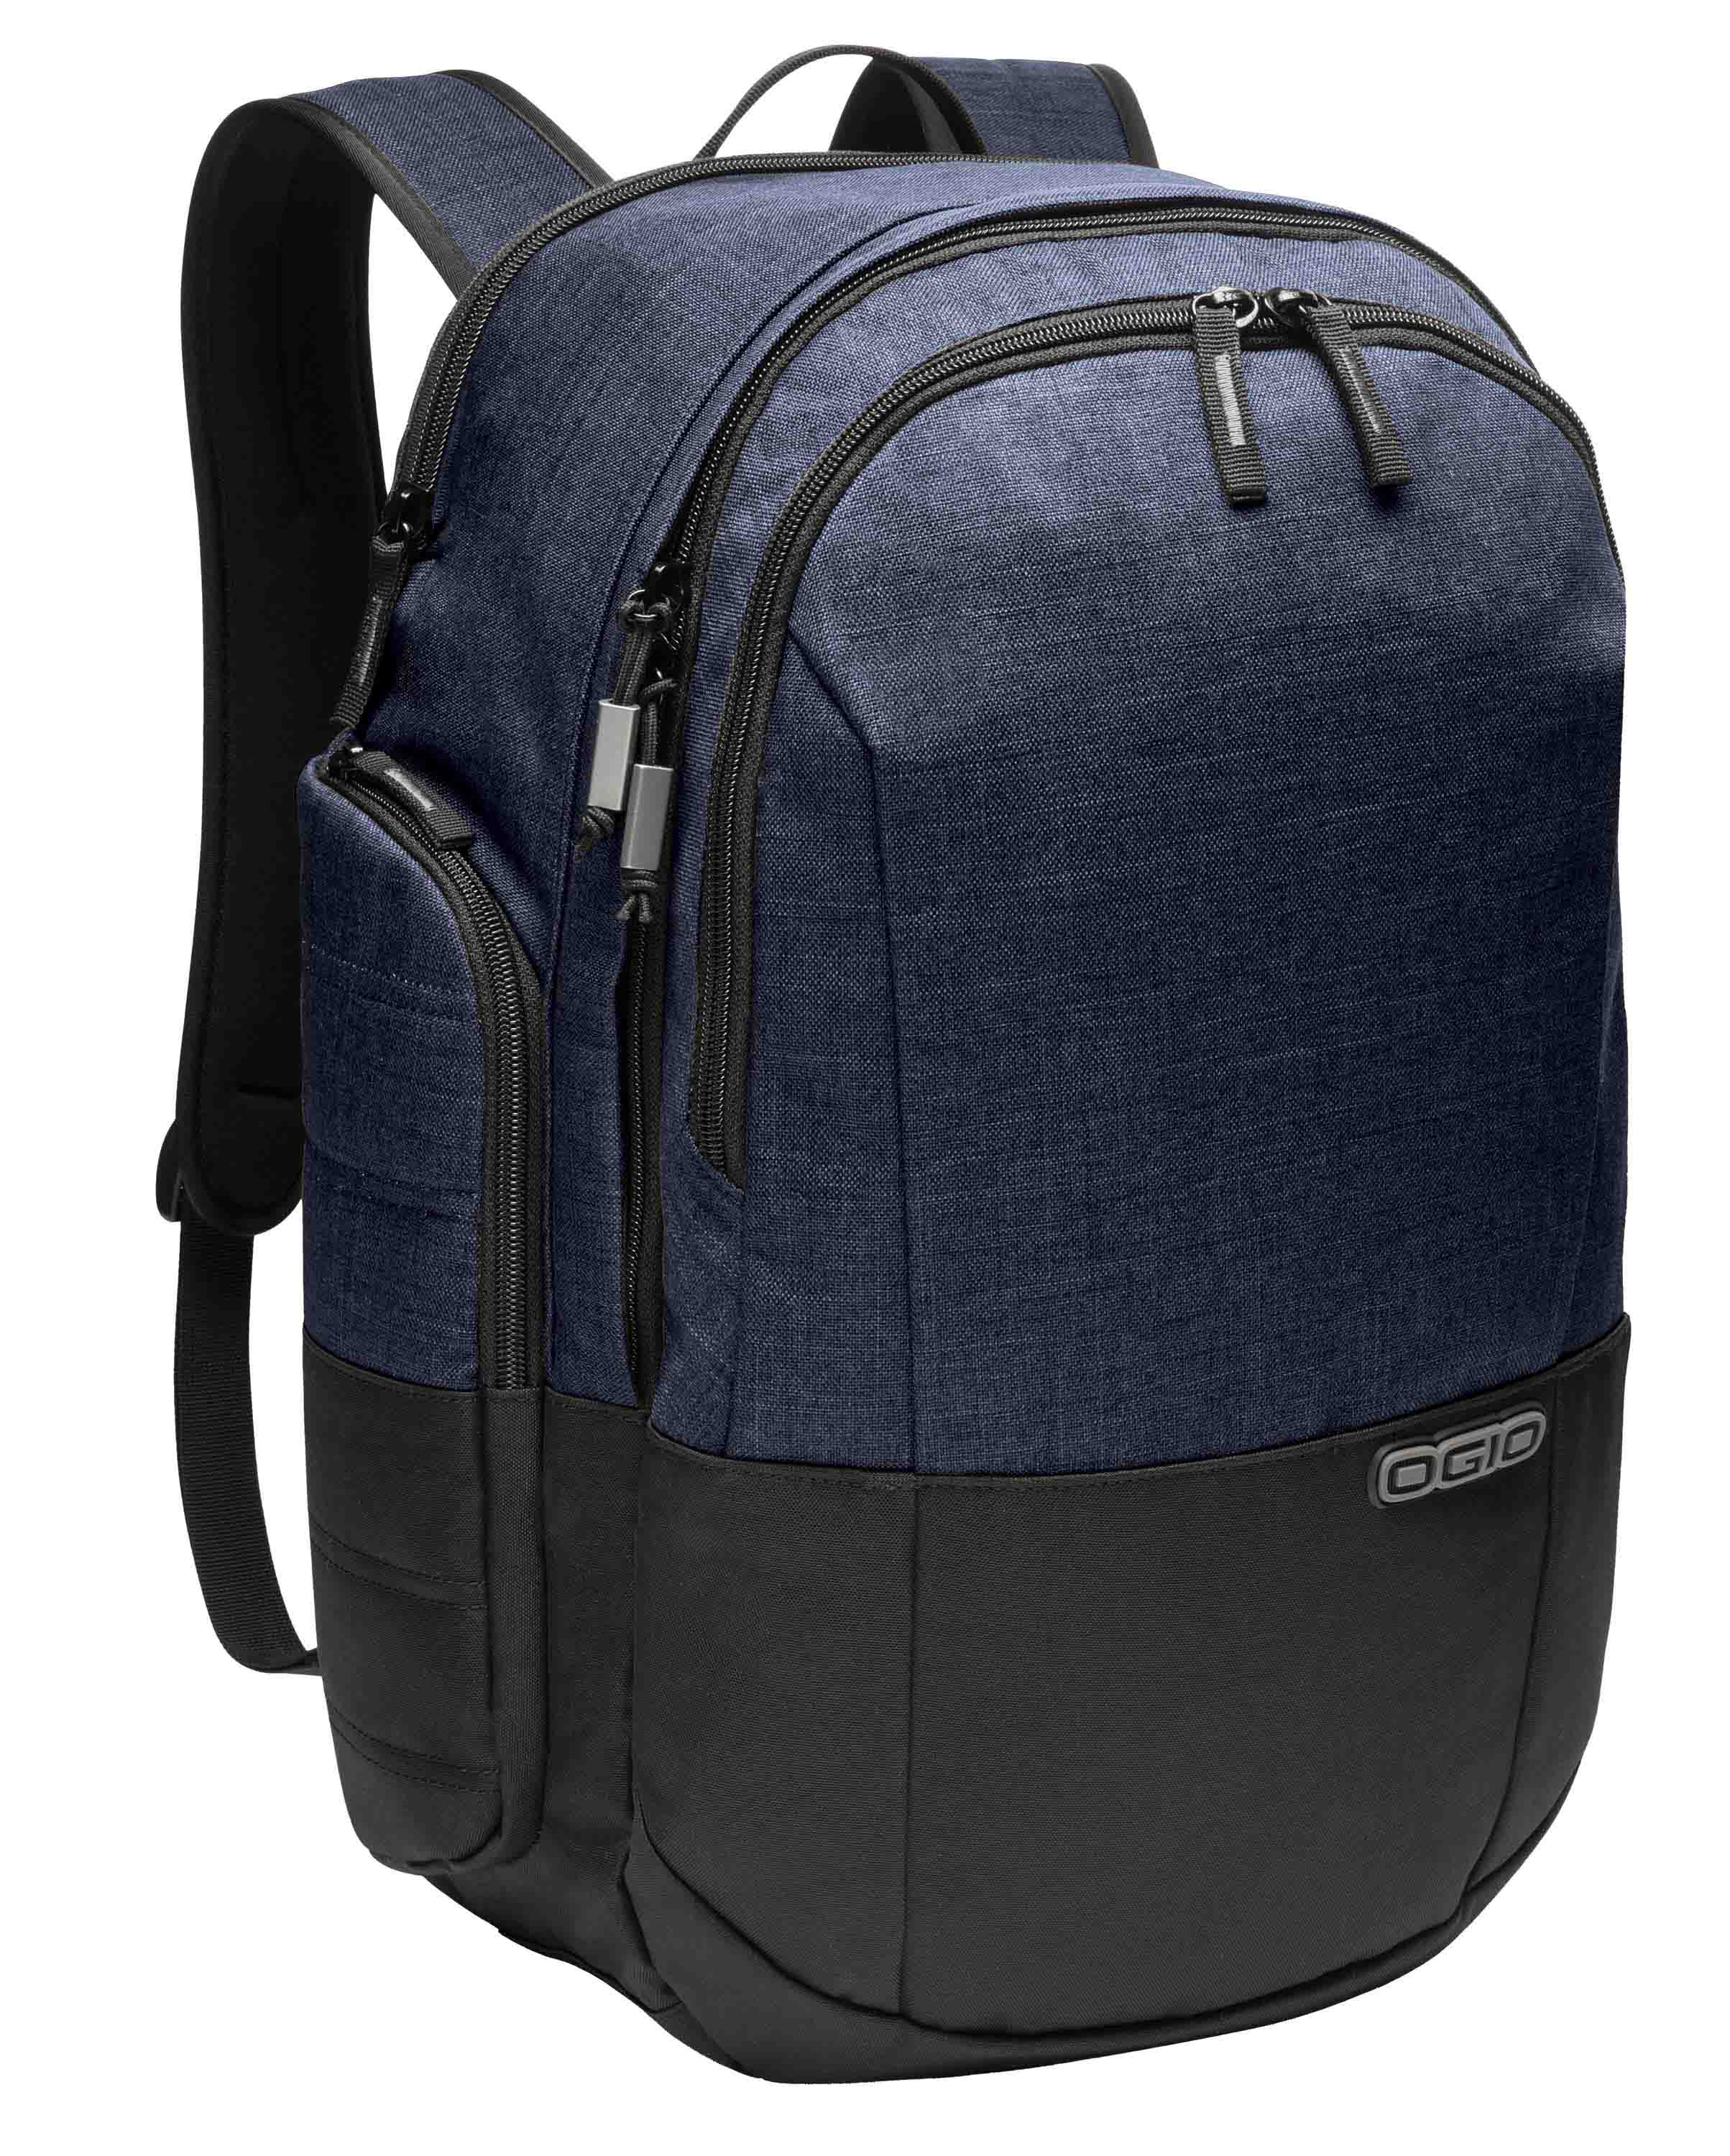 Z8411072-Ogio Rockwell Backpack